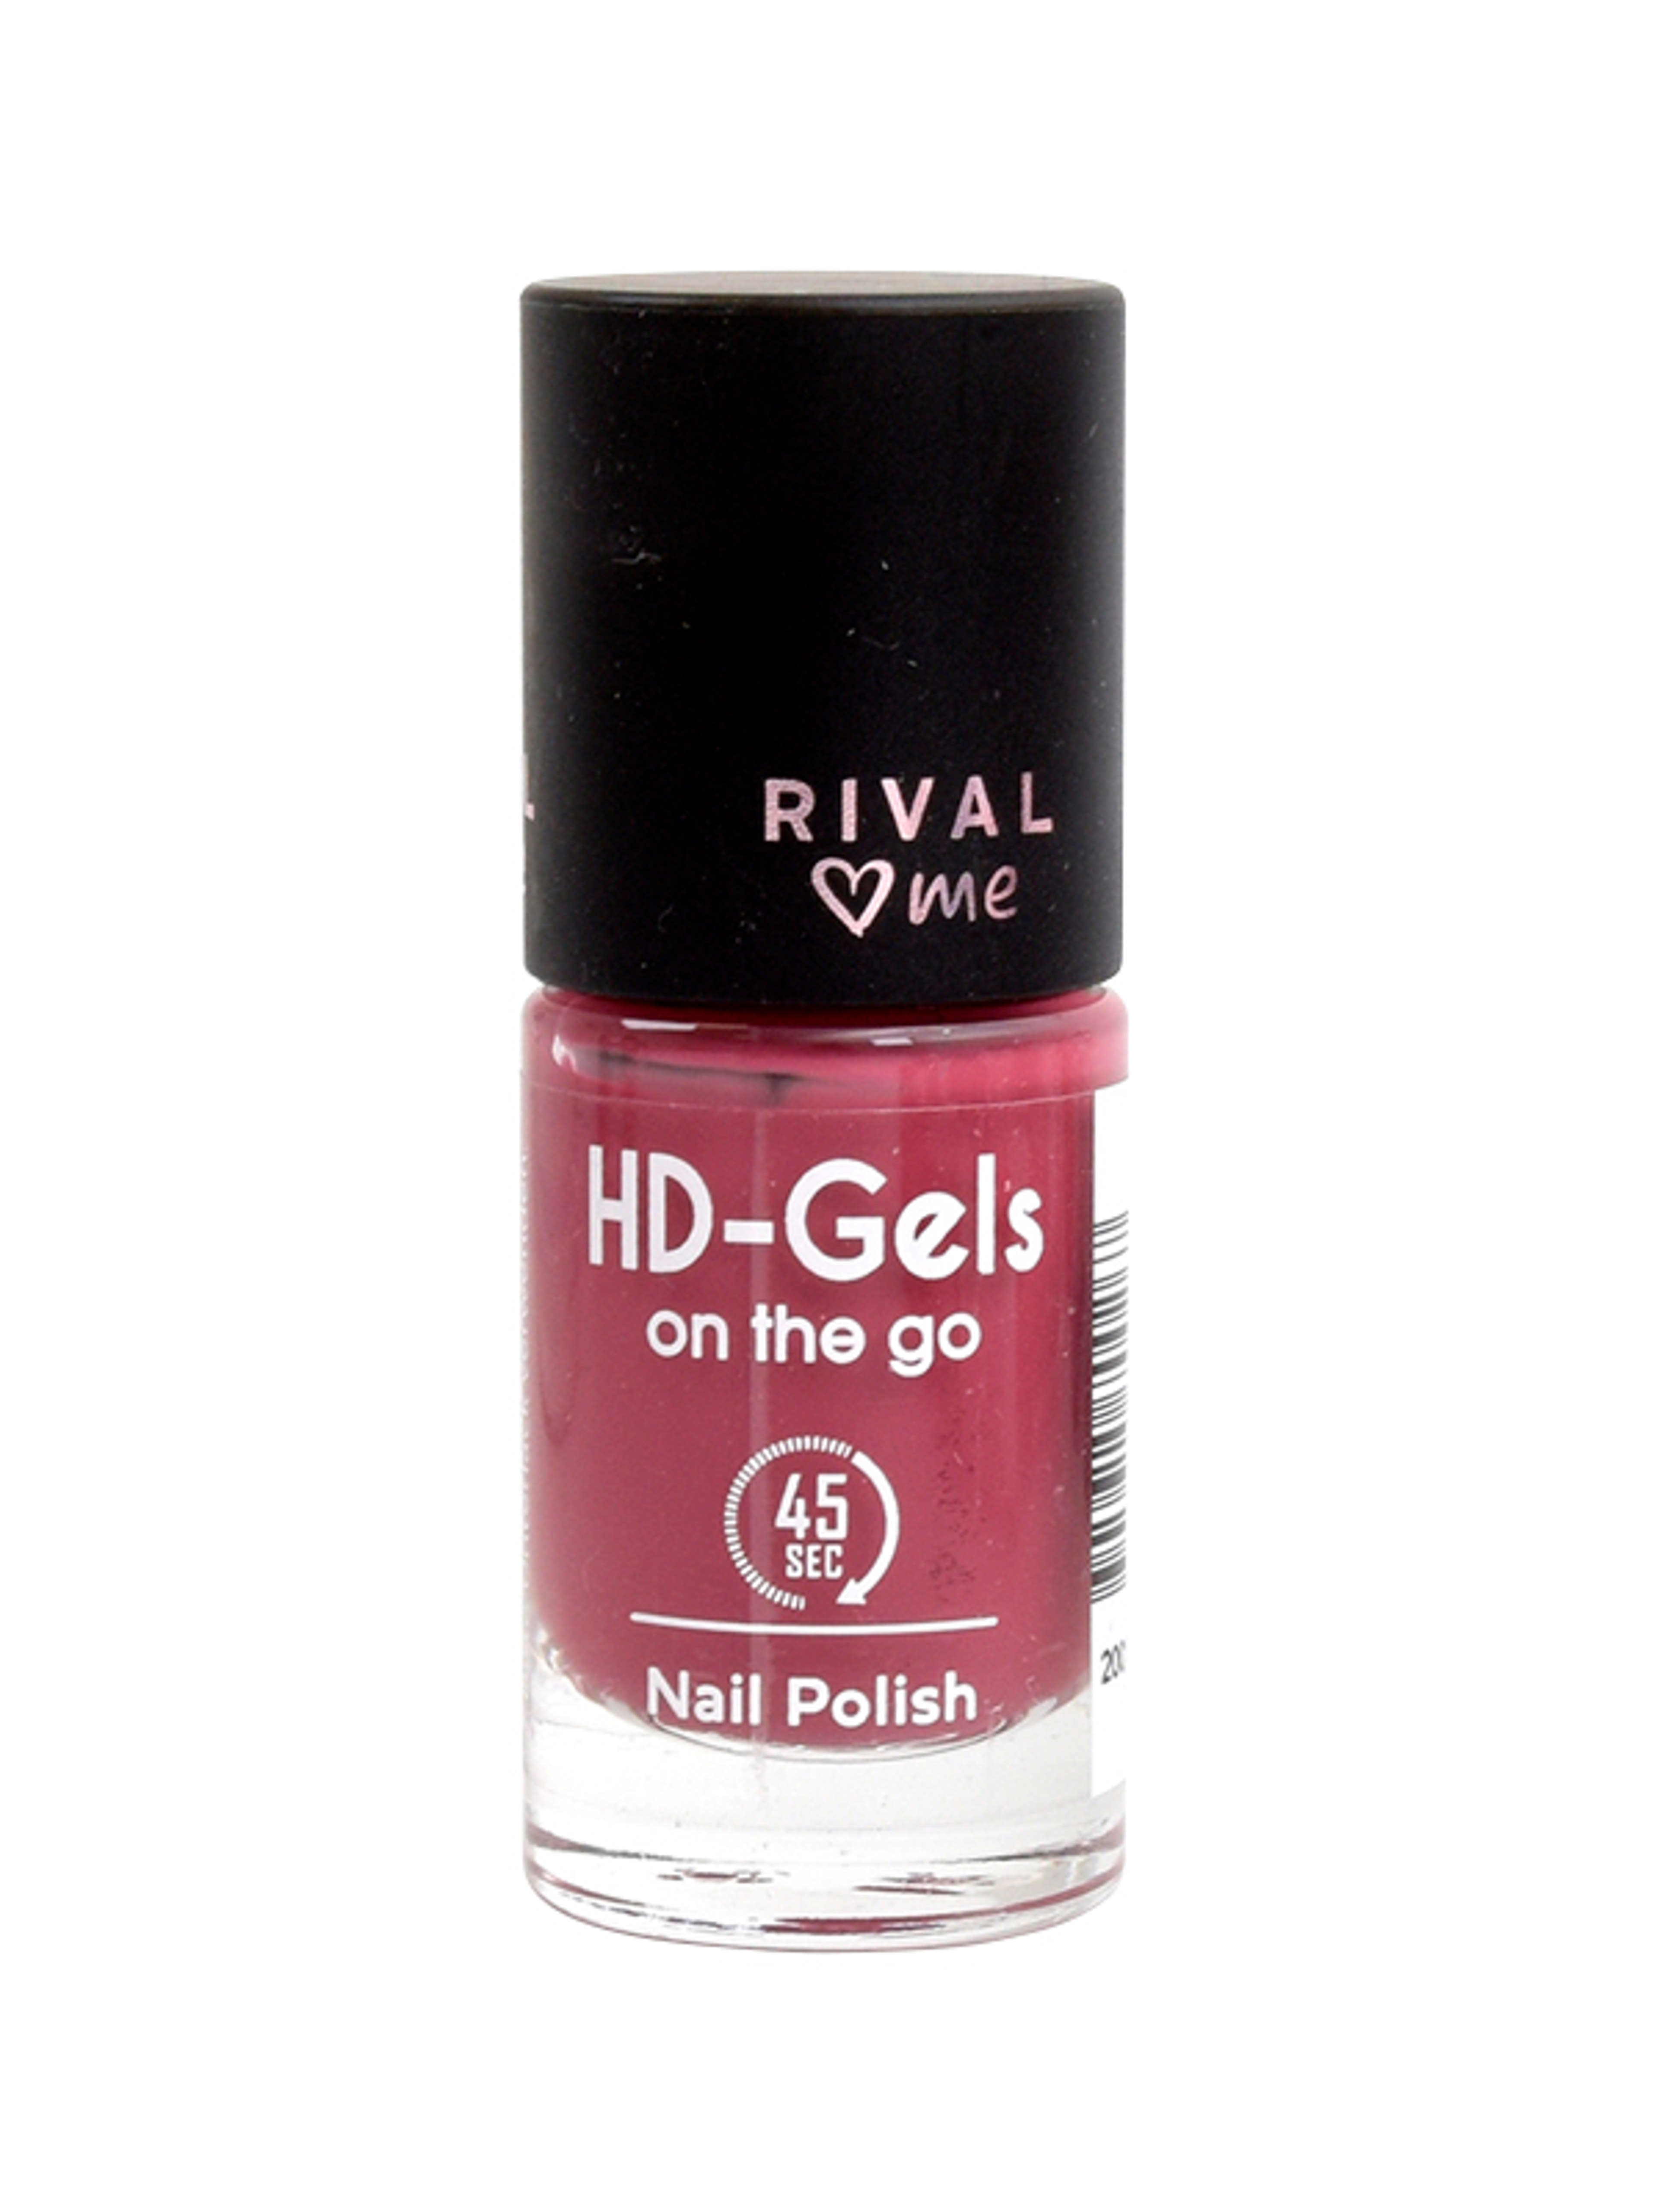 Rival Loves Me lakk hd-gels on the go 13 - 1 db-1